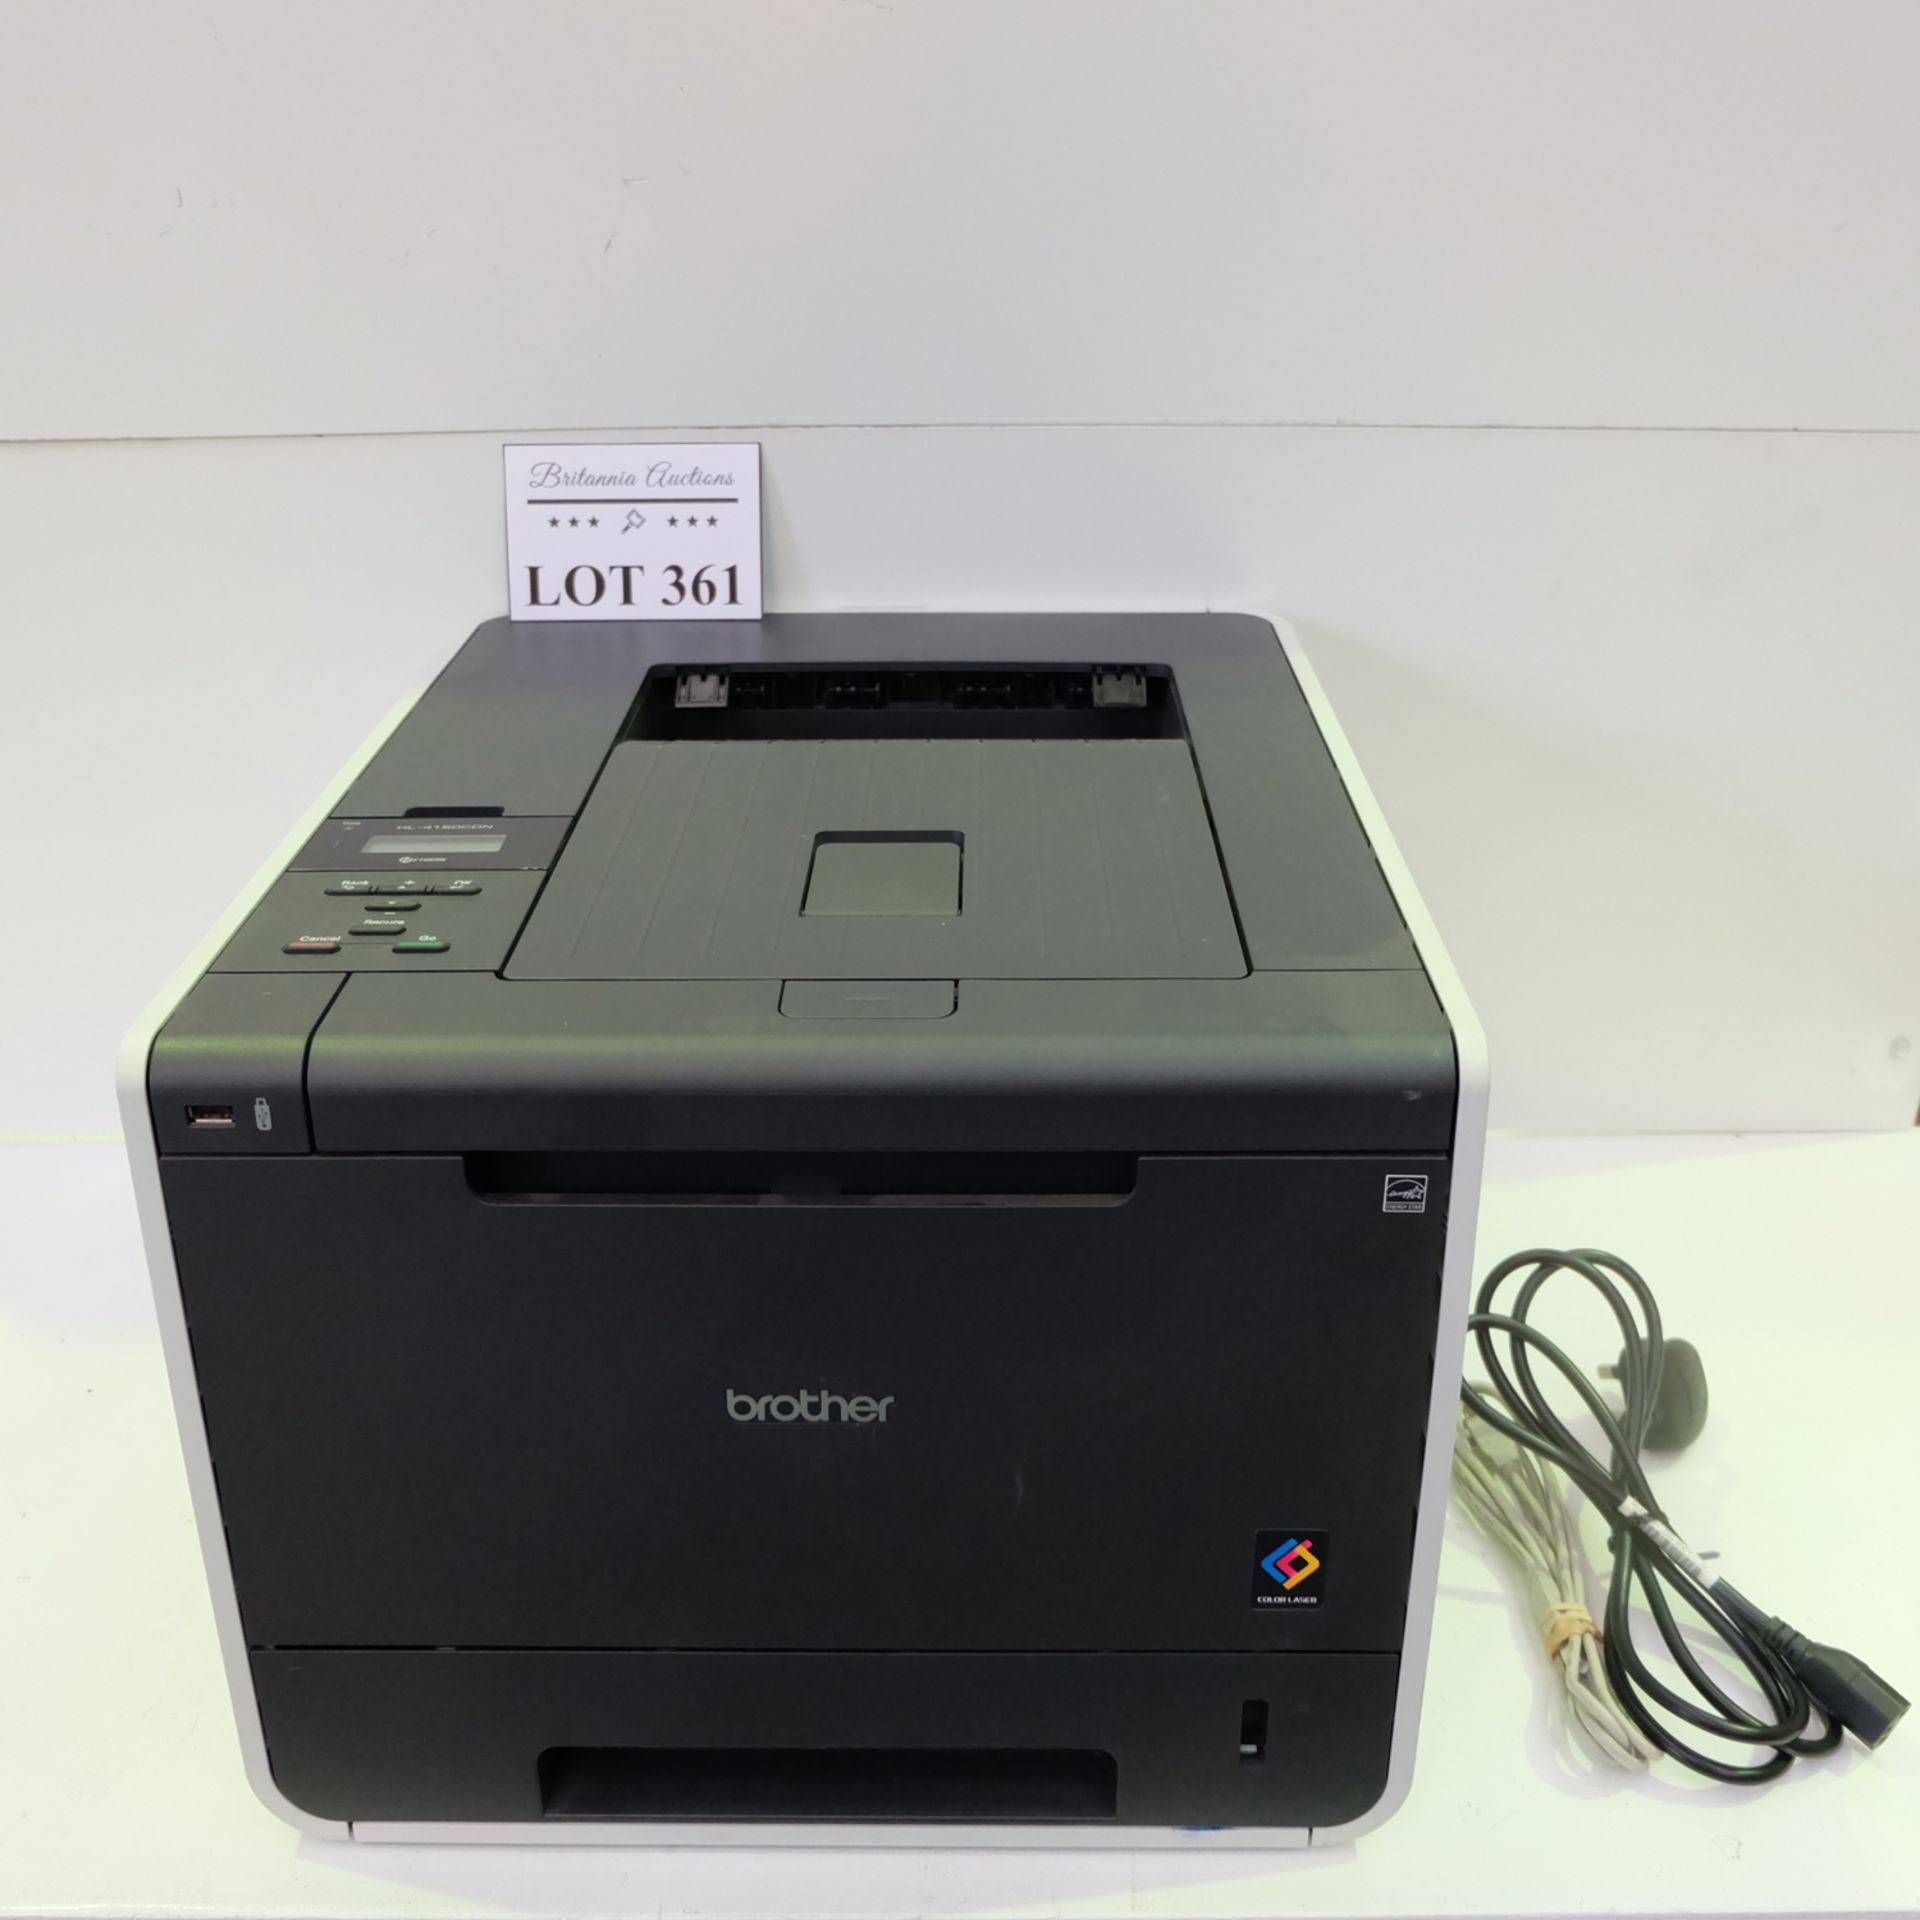 Brother Model HL-4150CDN Colour Laser Printer.